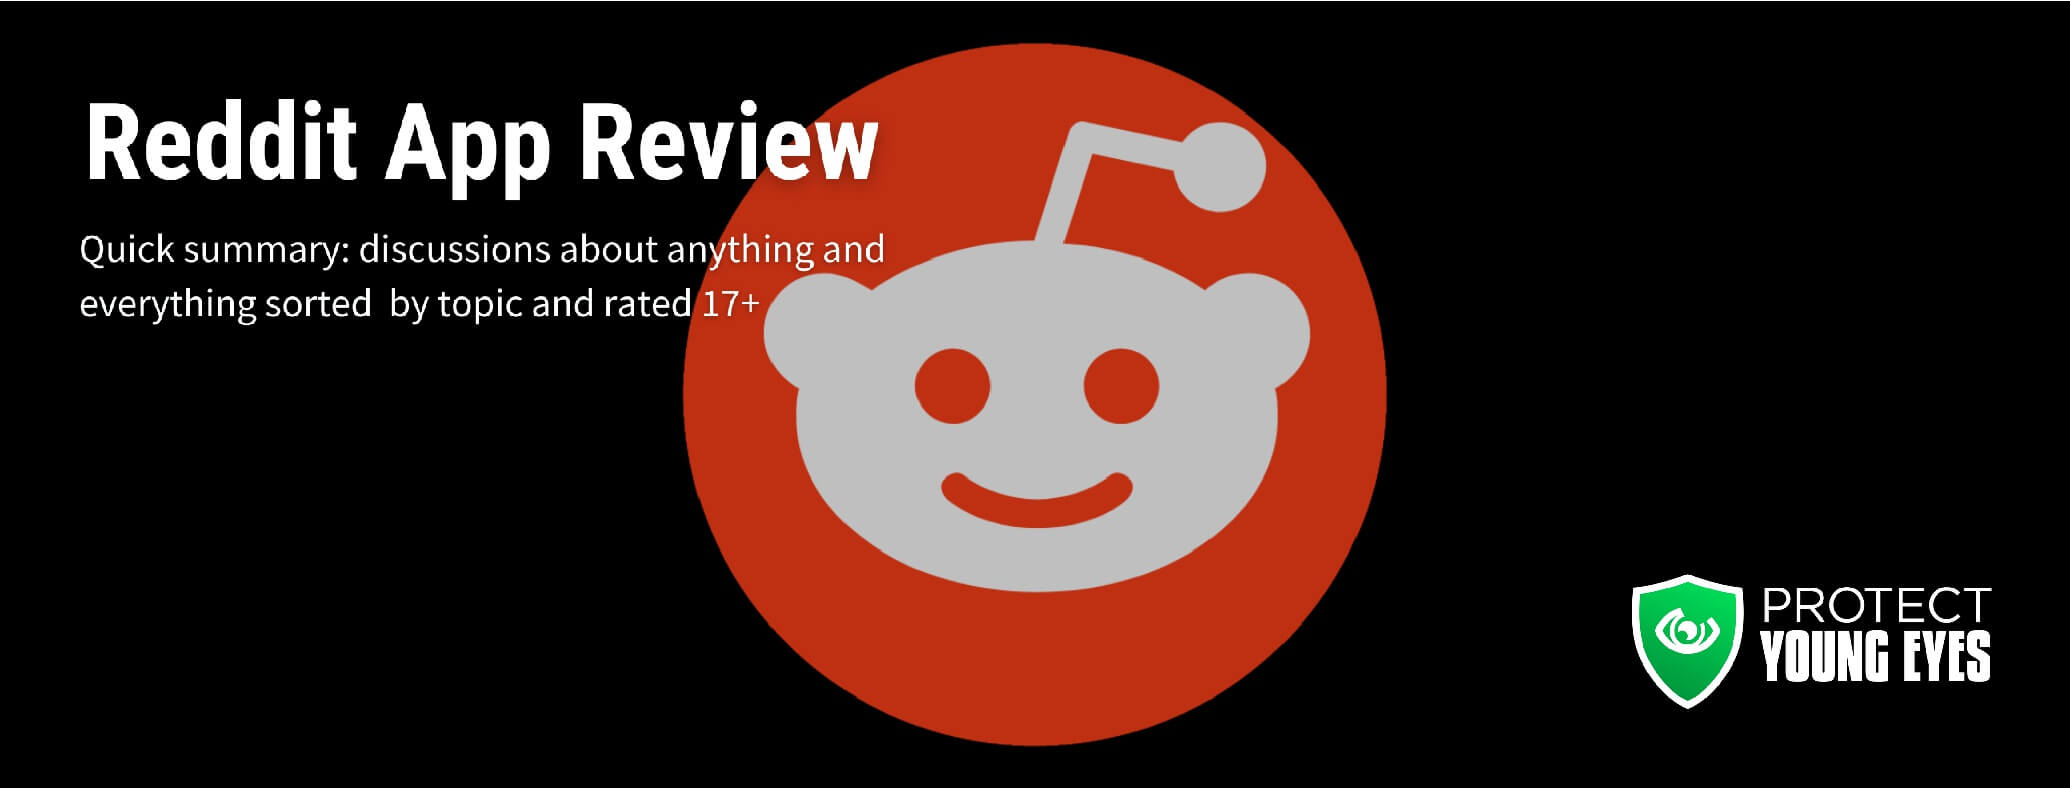 Reddit App Review Header Image